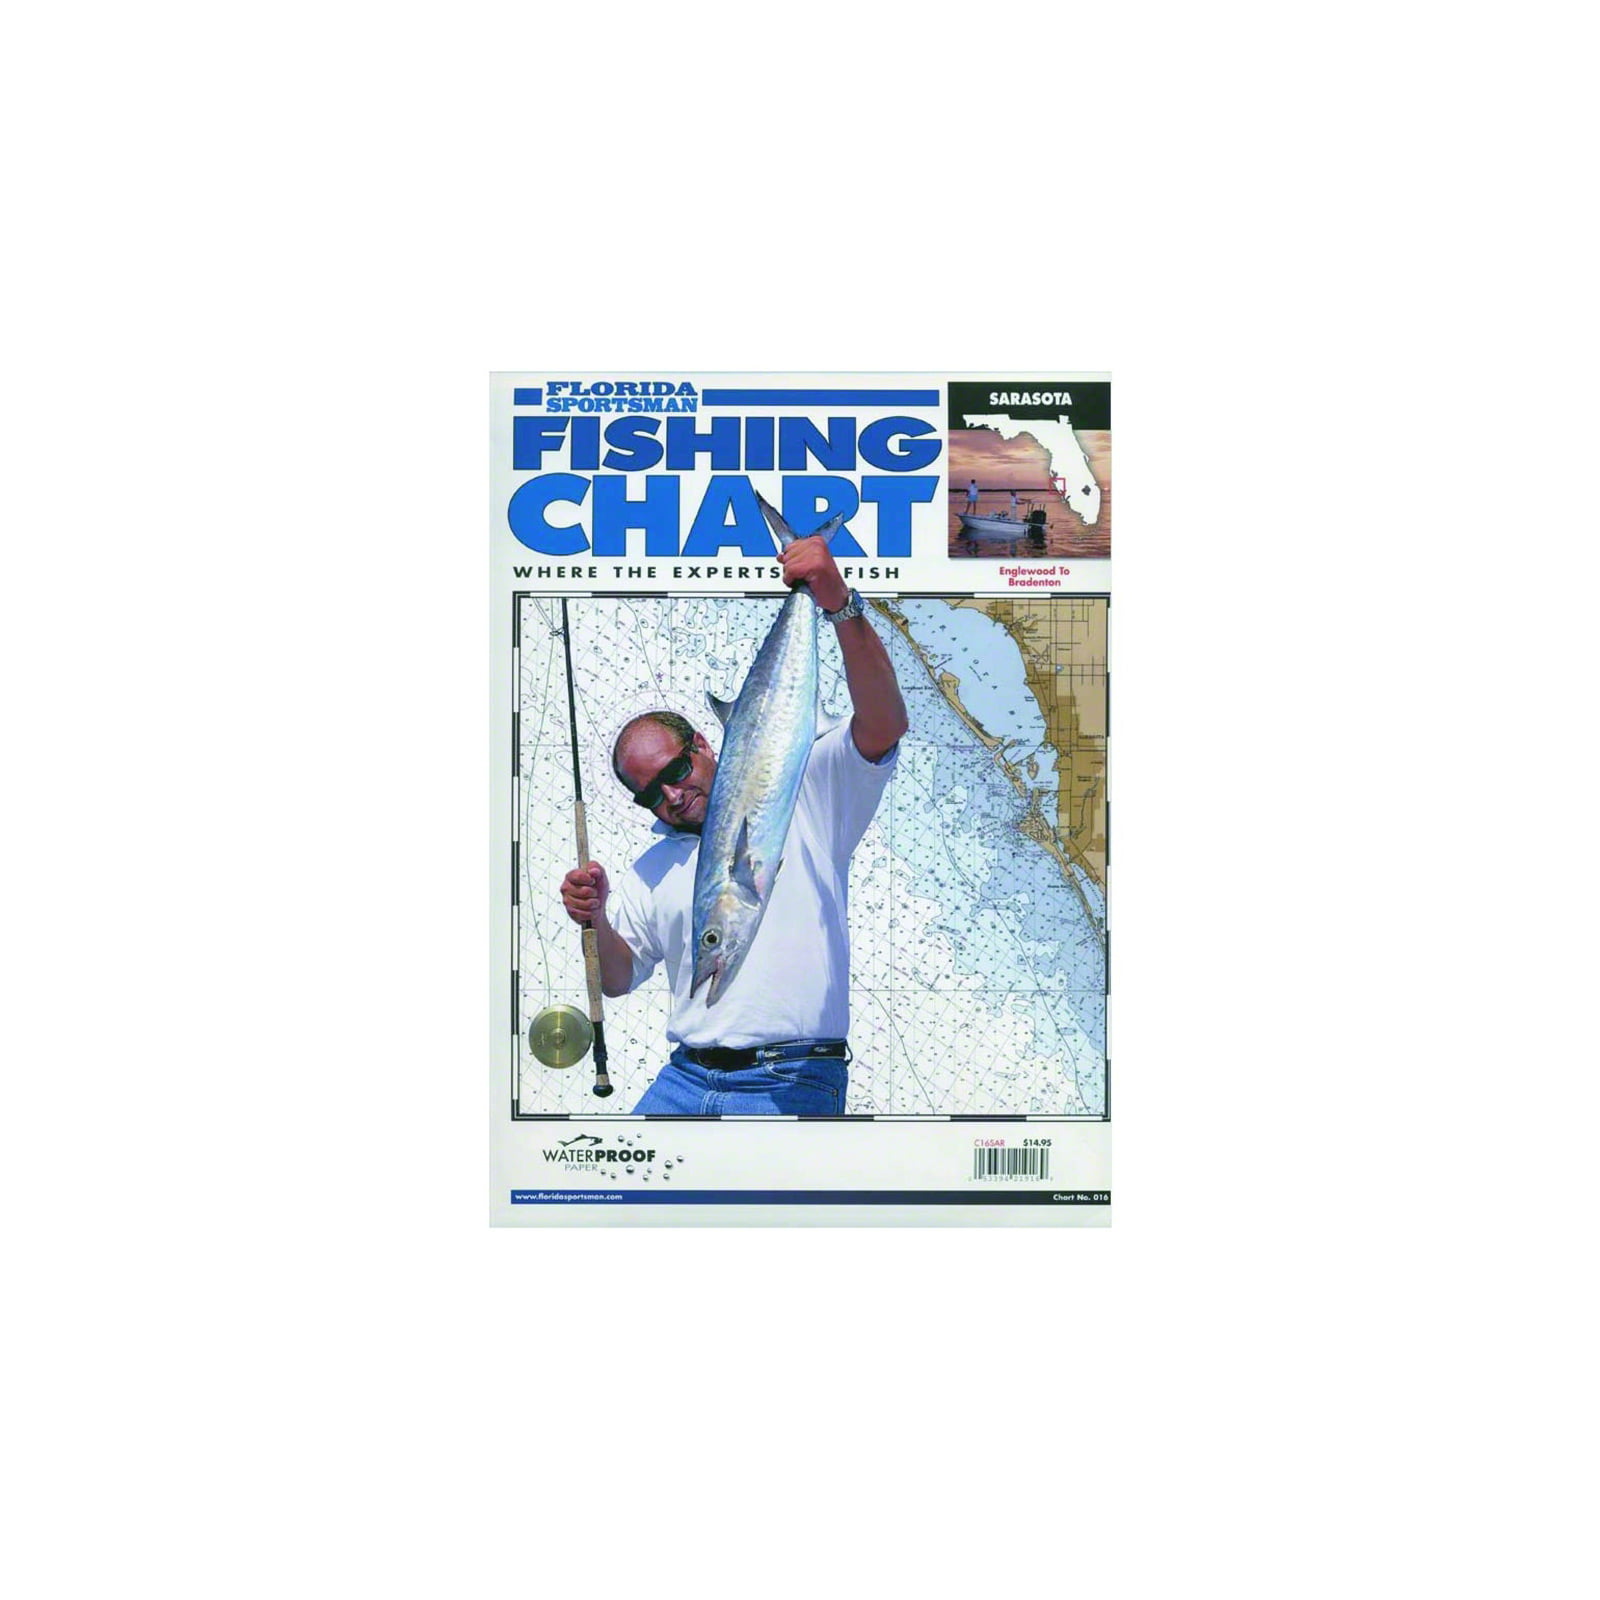 Florida Sportsman Fishing Charts